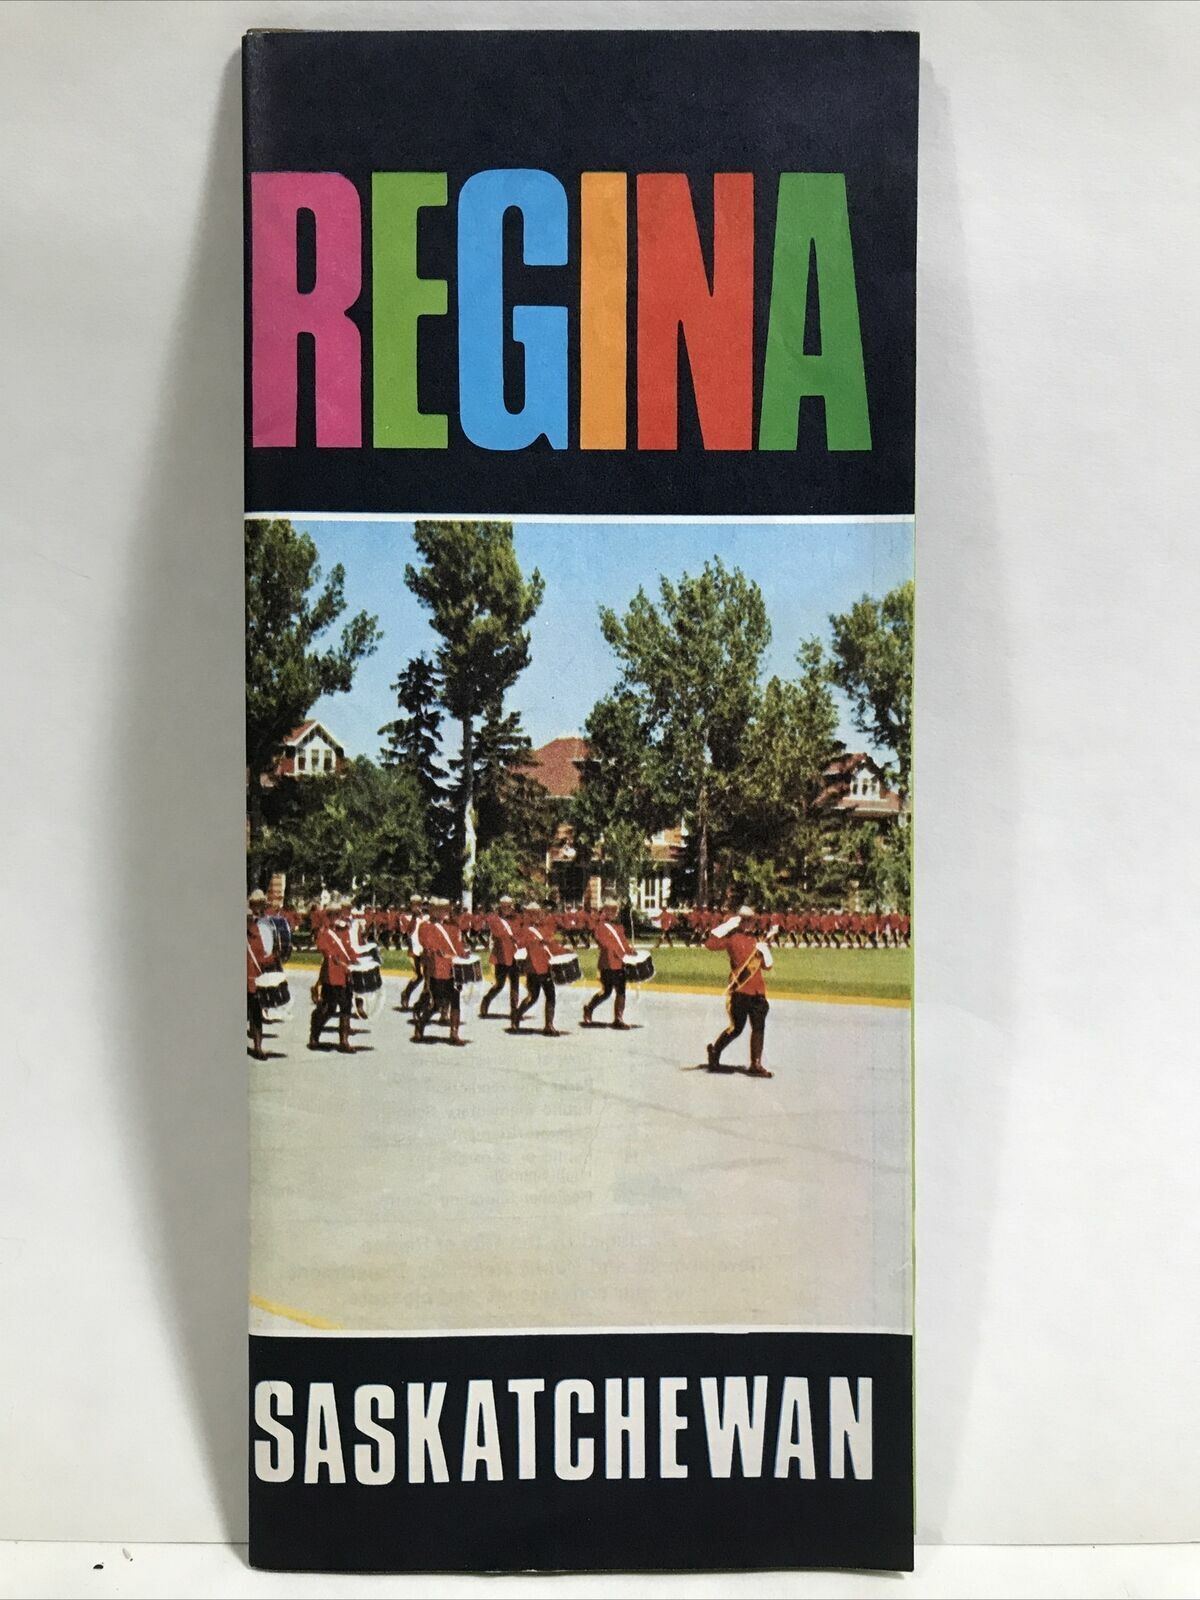 1973 REGINA SASKATCHEWAN CANADA Large Fold Out Travel Guide Map and Brochure